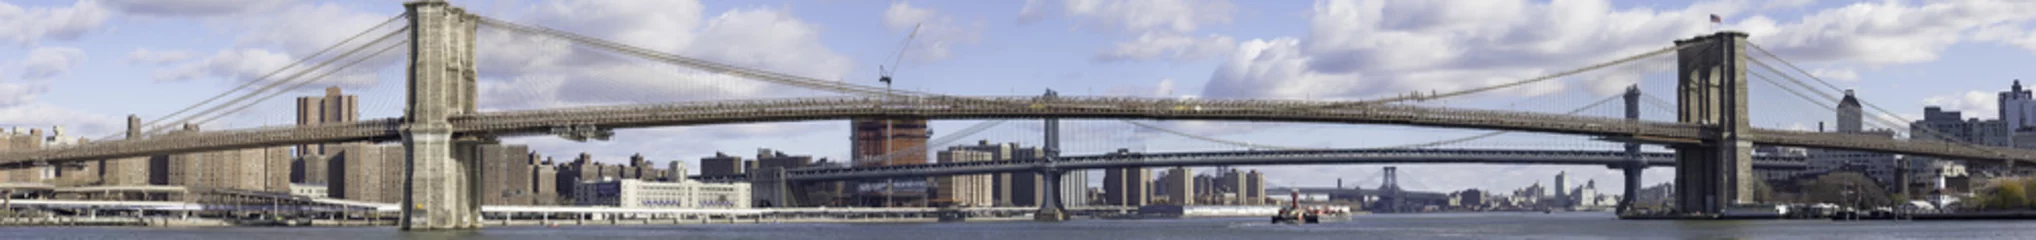 Rideaux velours Brooklyn Bridge Brooklyn Bridge, New York